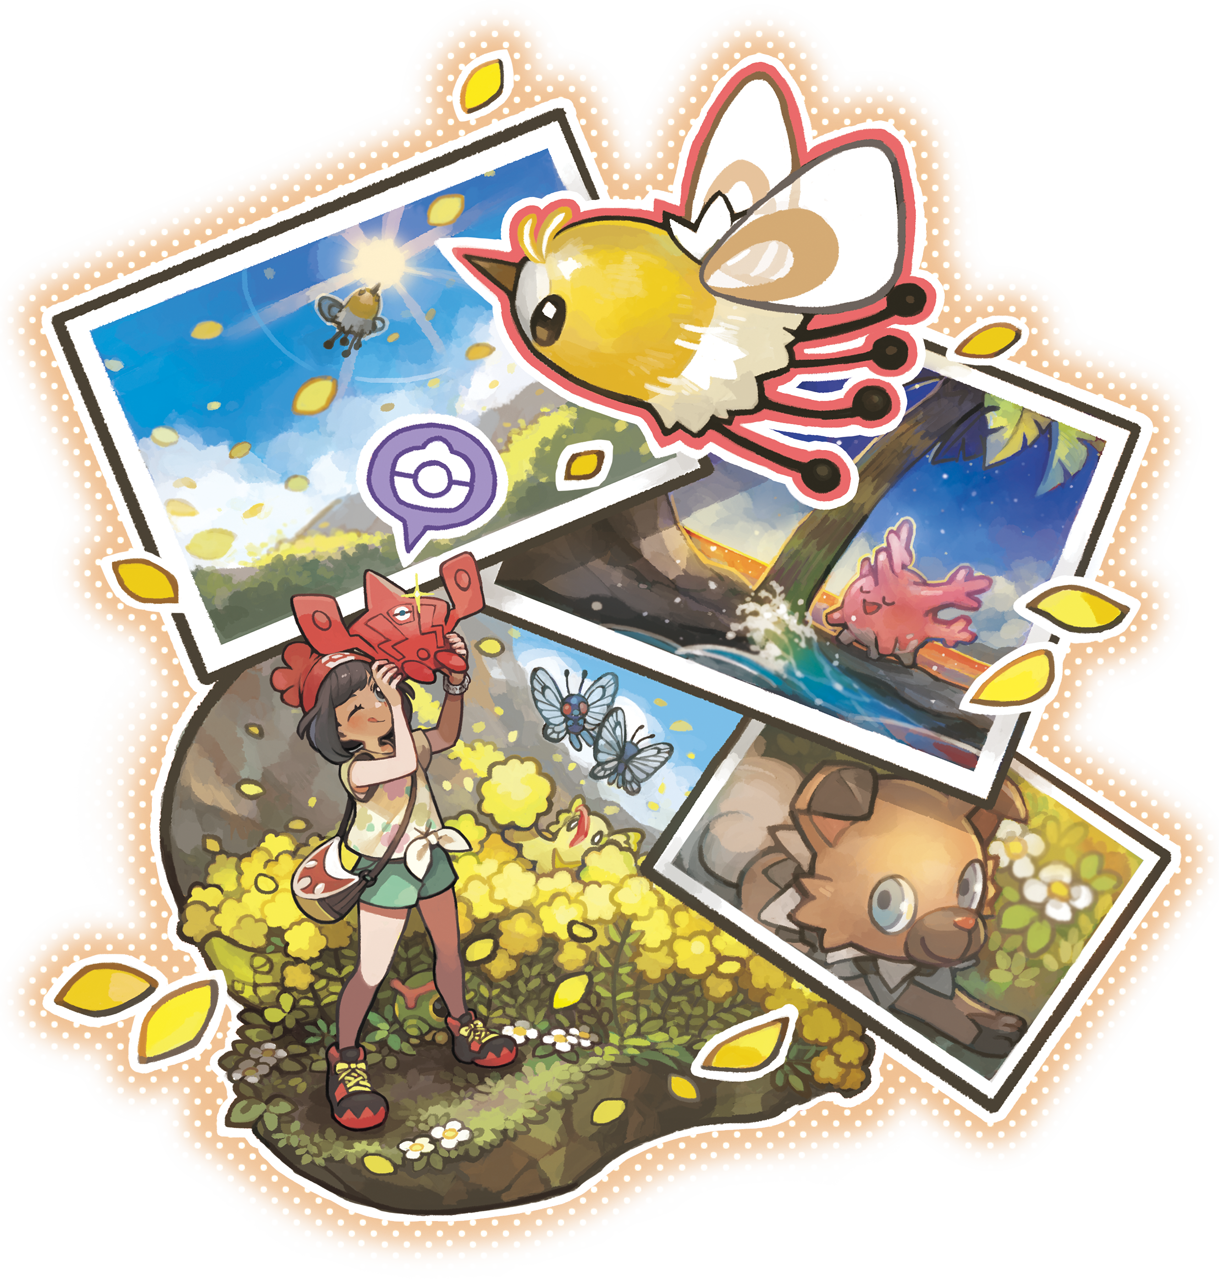 Pokémon the Series: Sun & Moon - Bulbapedia, the community-driven